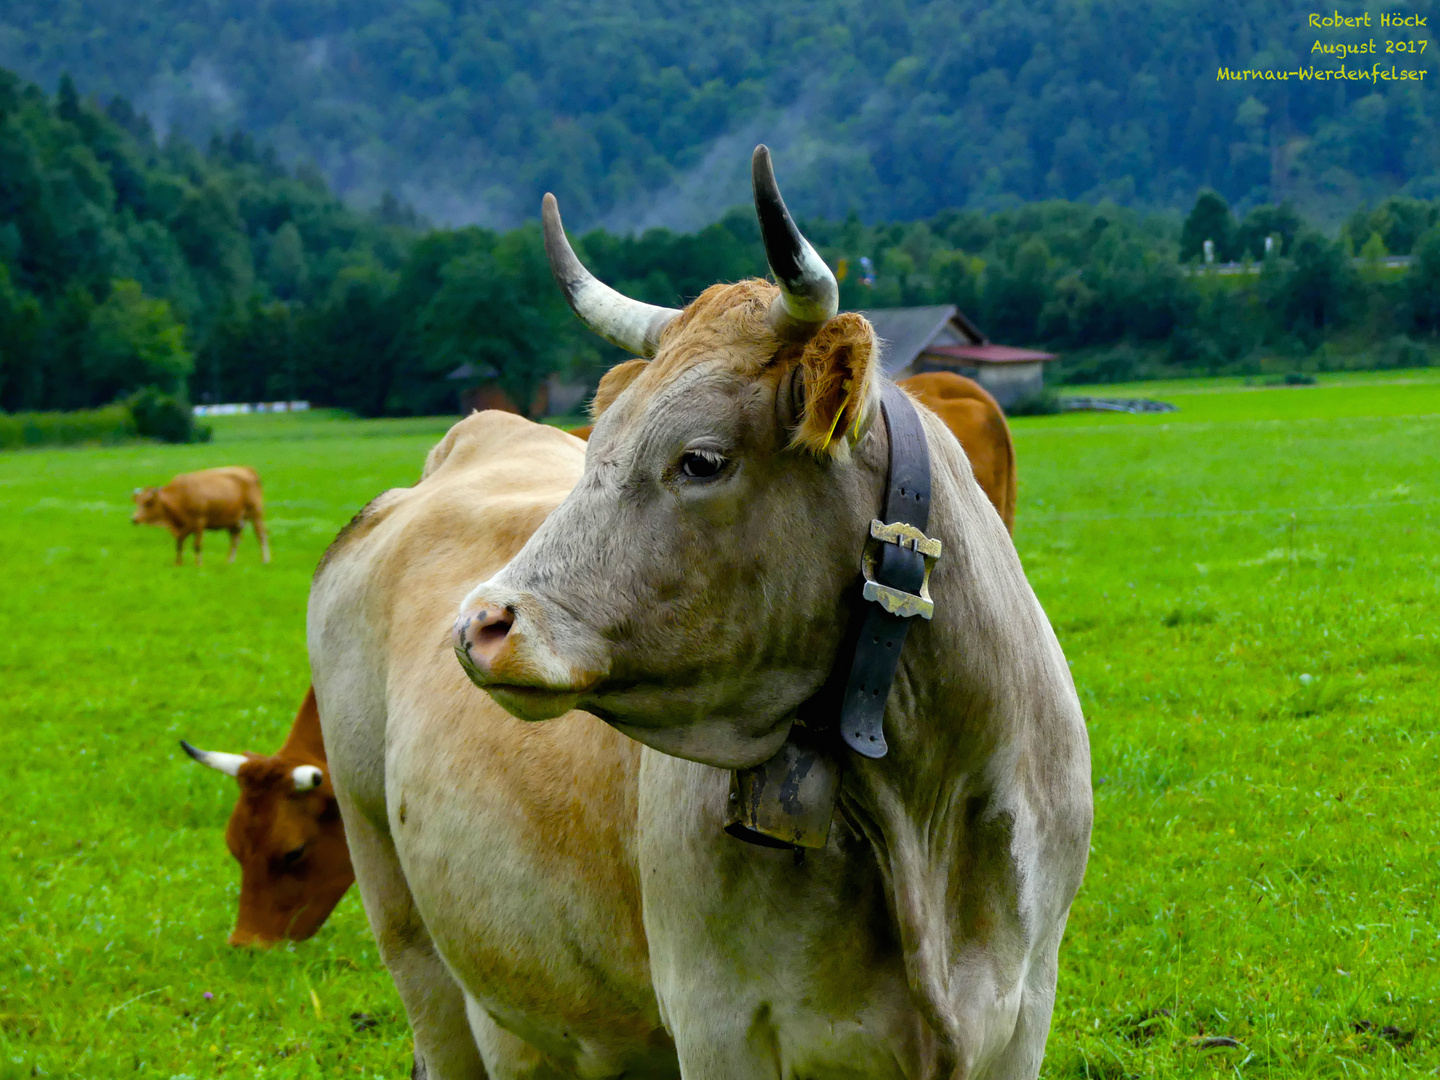 Murnau-Werdenfelser Kuh in Bayern, ein besonders helles Exemplar